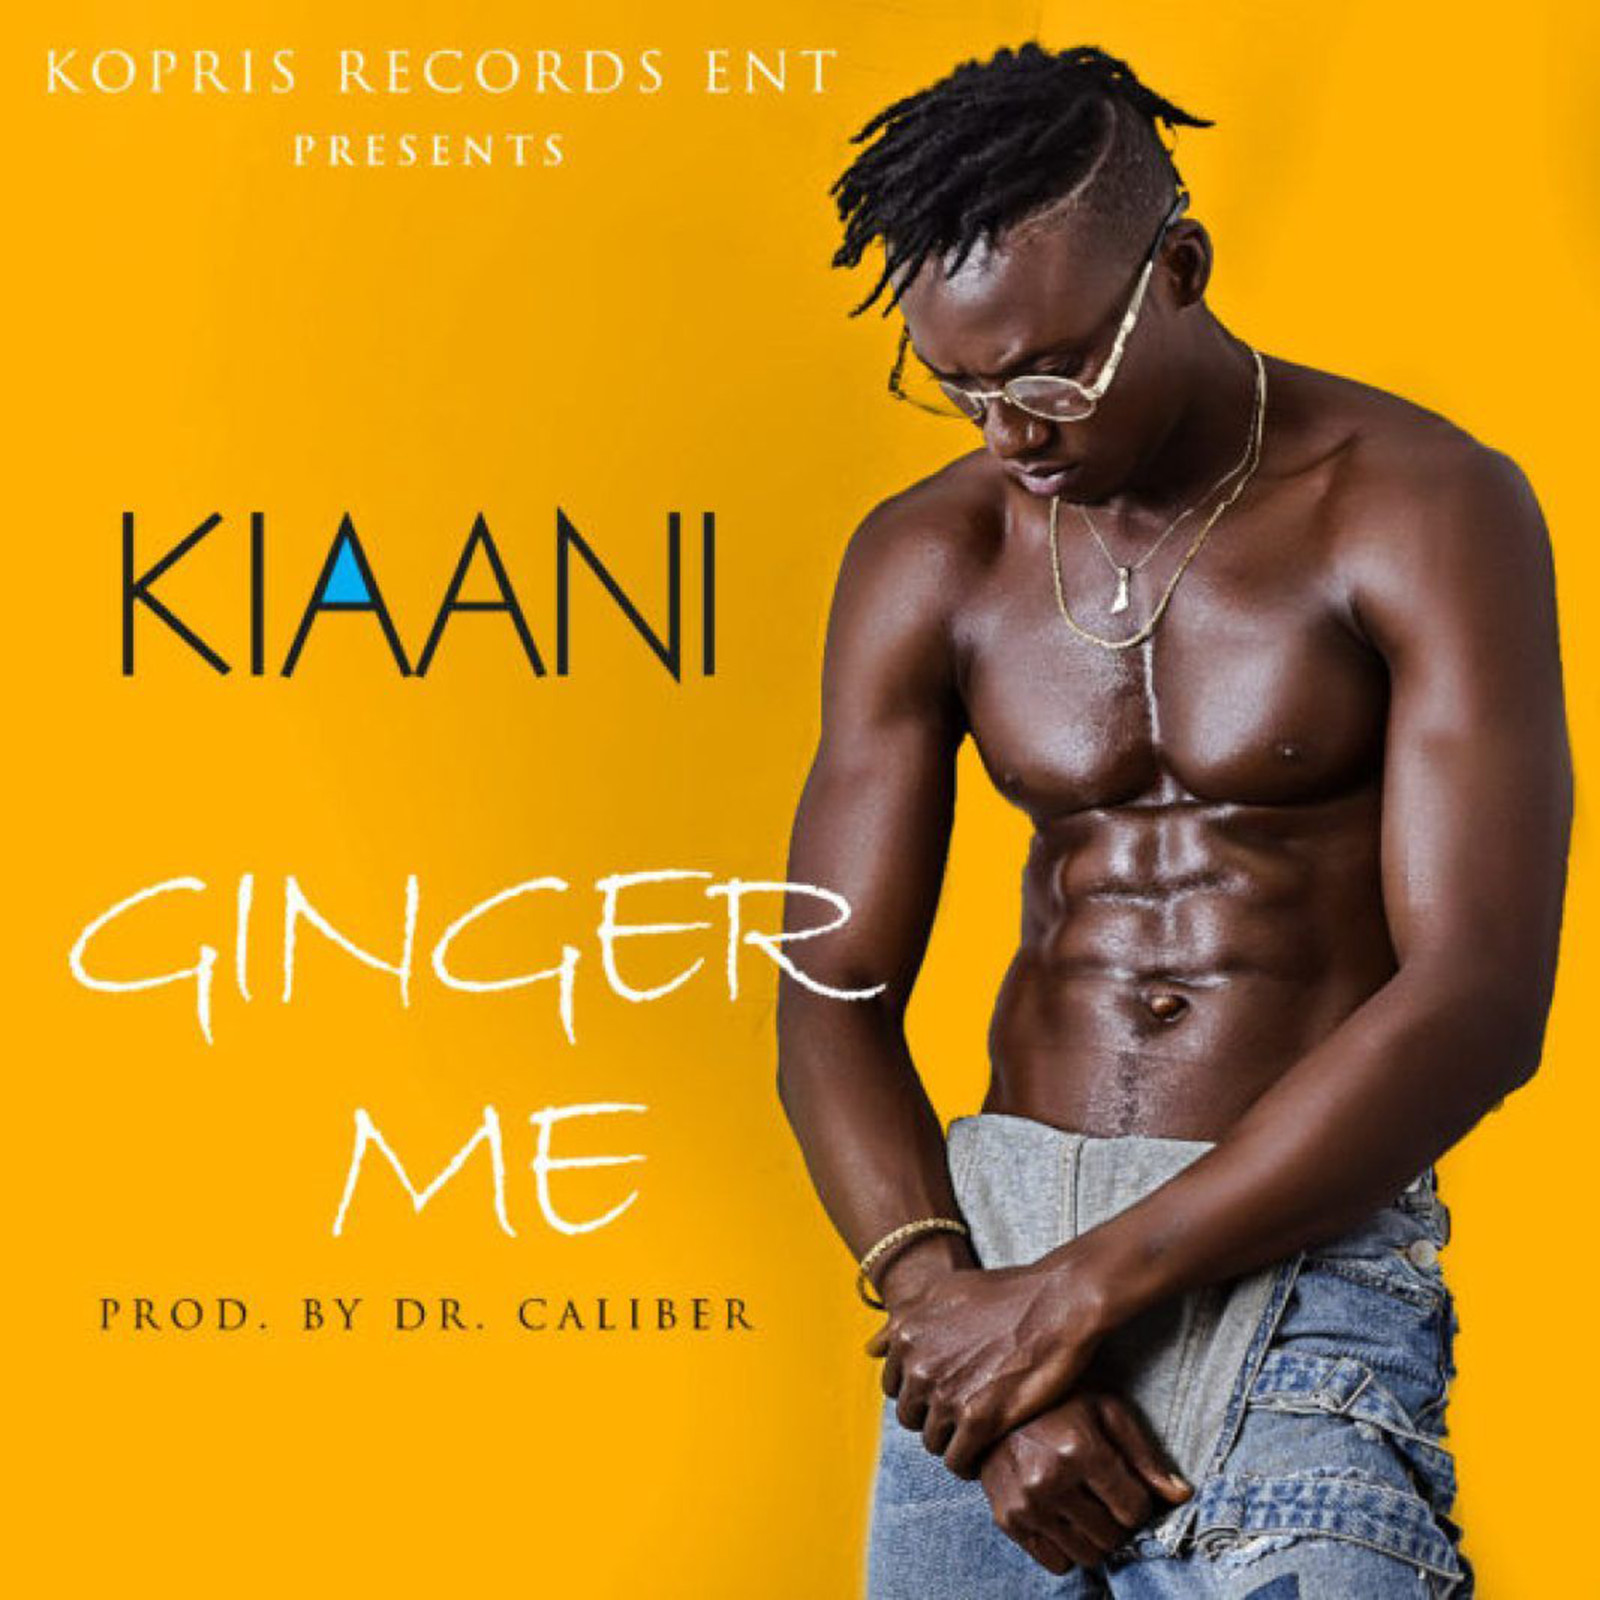 Ginger Me by Kiaani